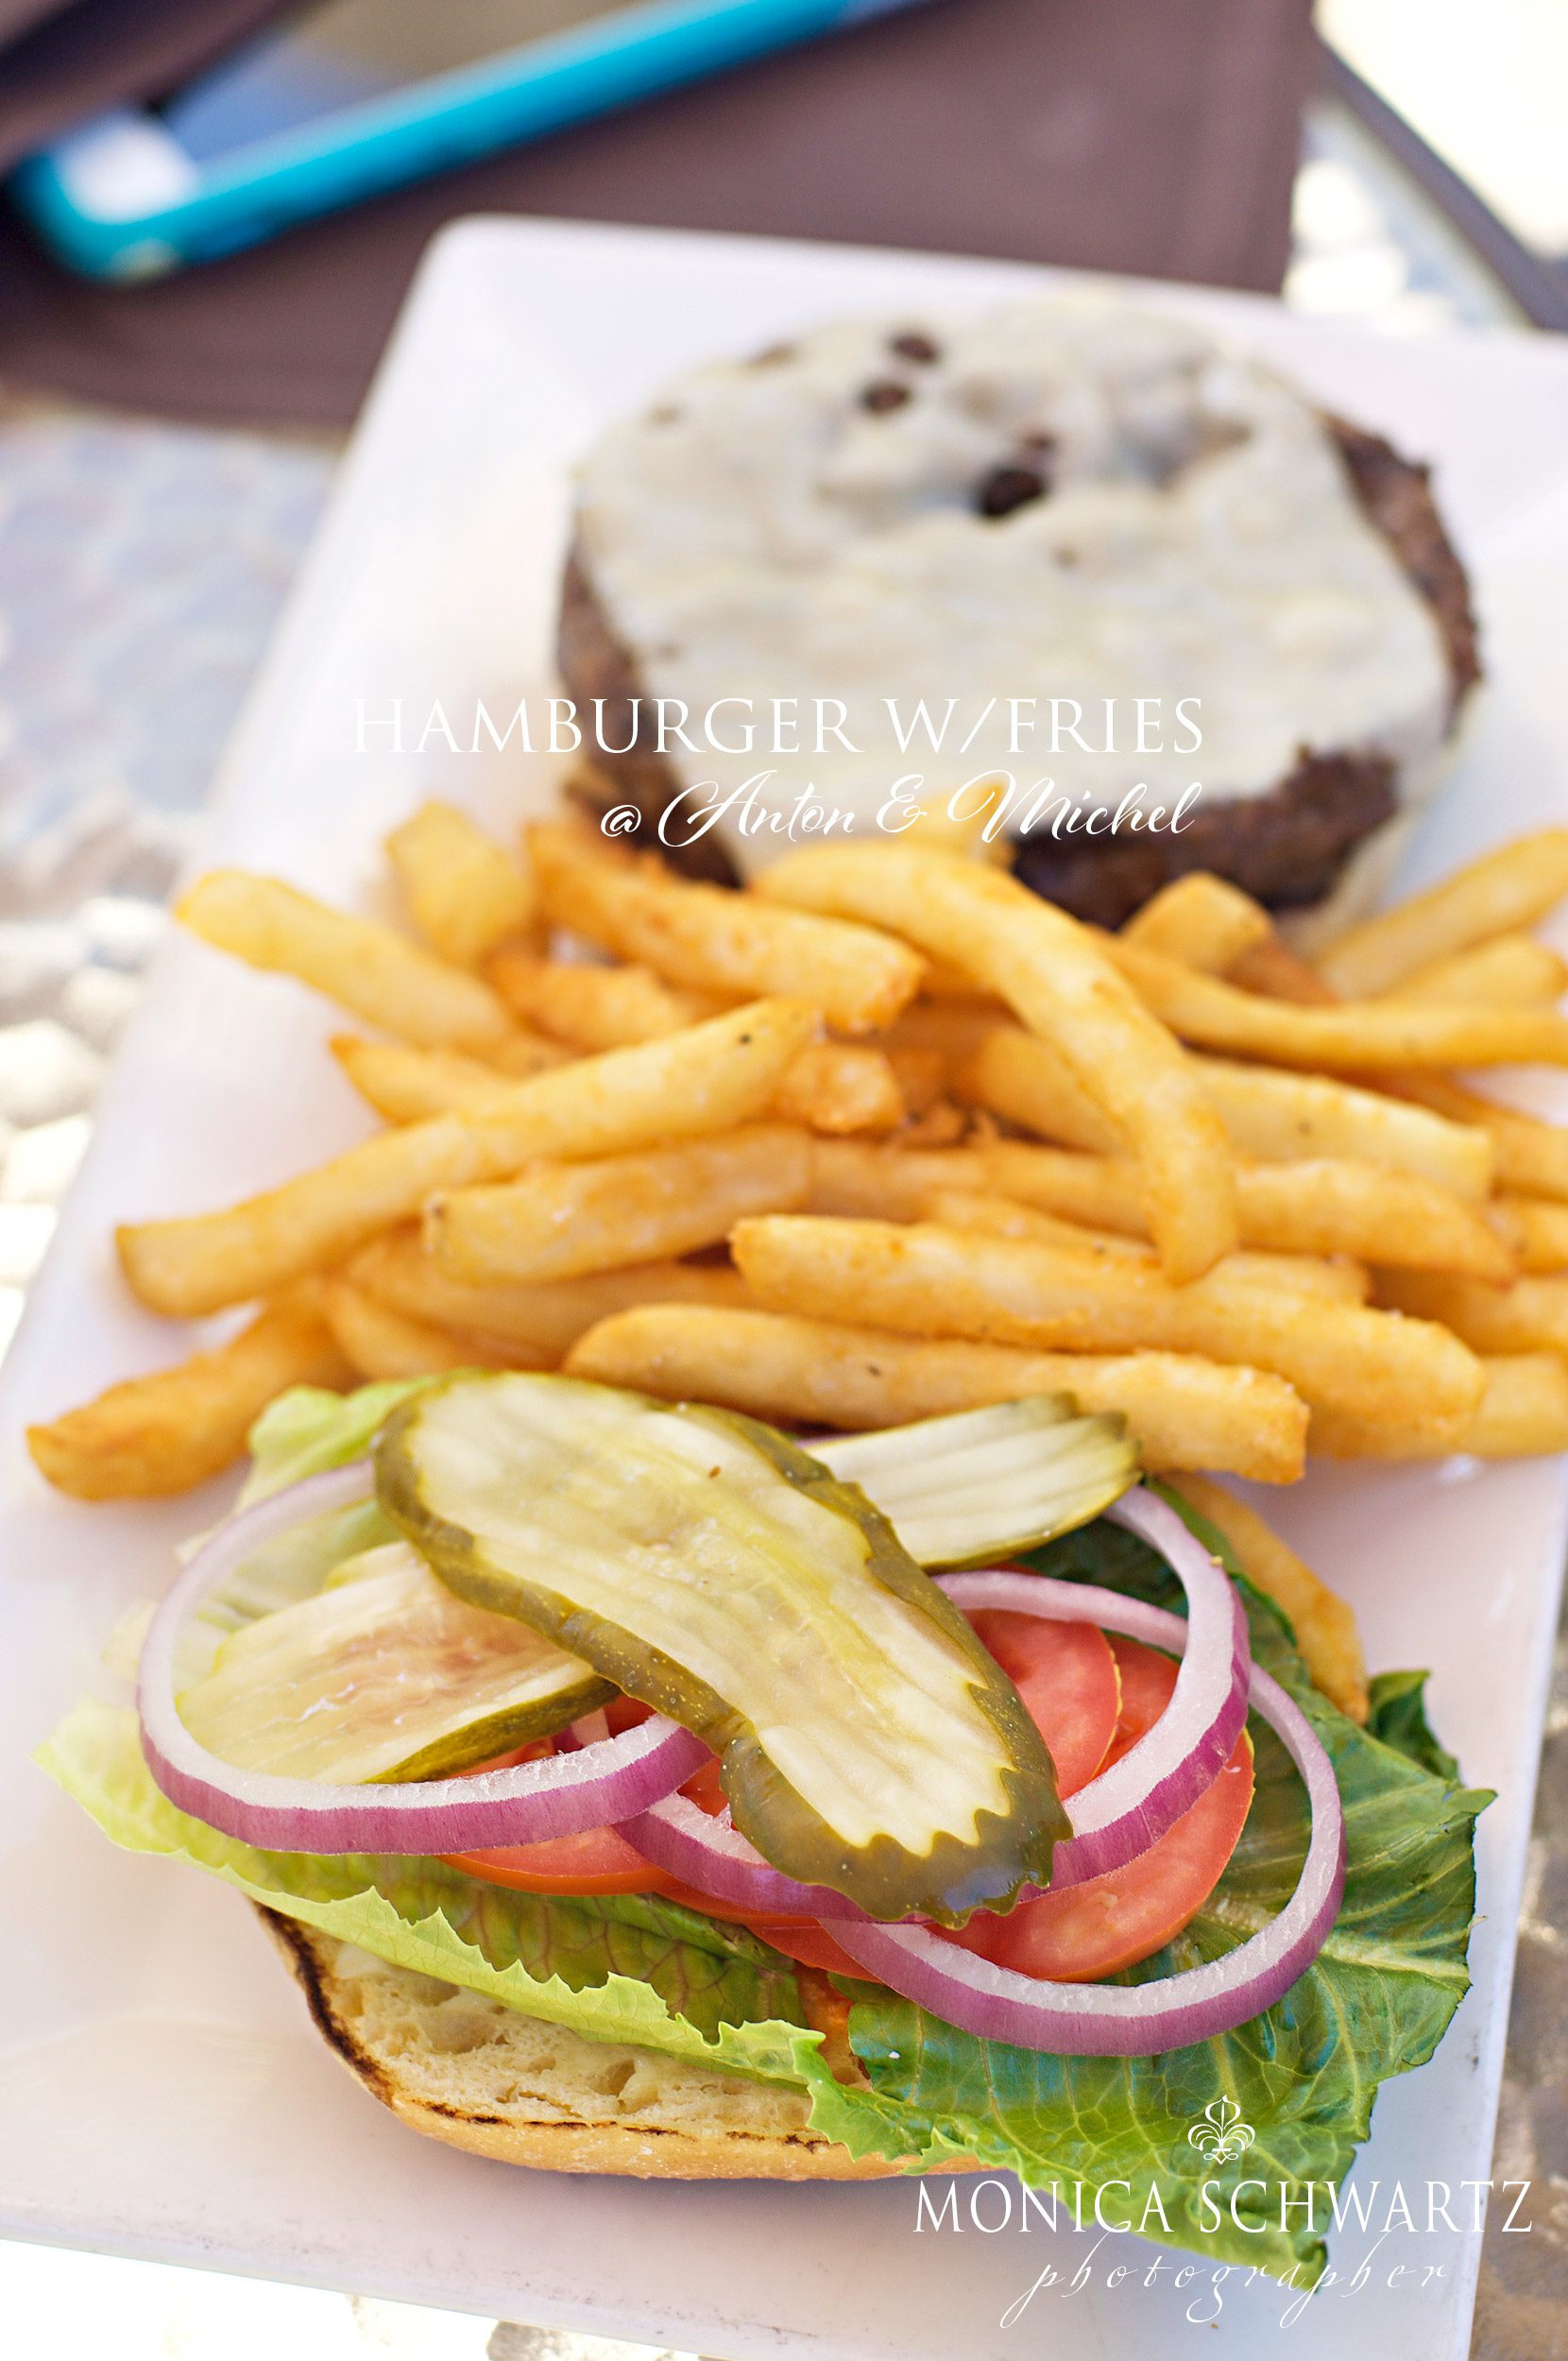 Hamburger-and-fries-at-Anton-and-Michel-restaurant-Carmel-by-the-Sea-California